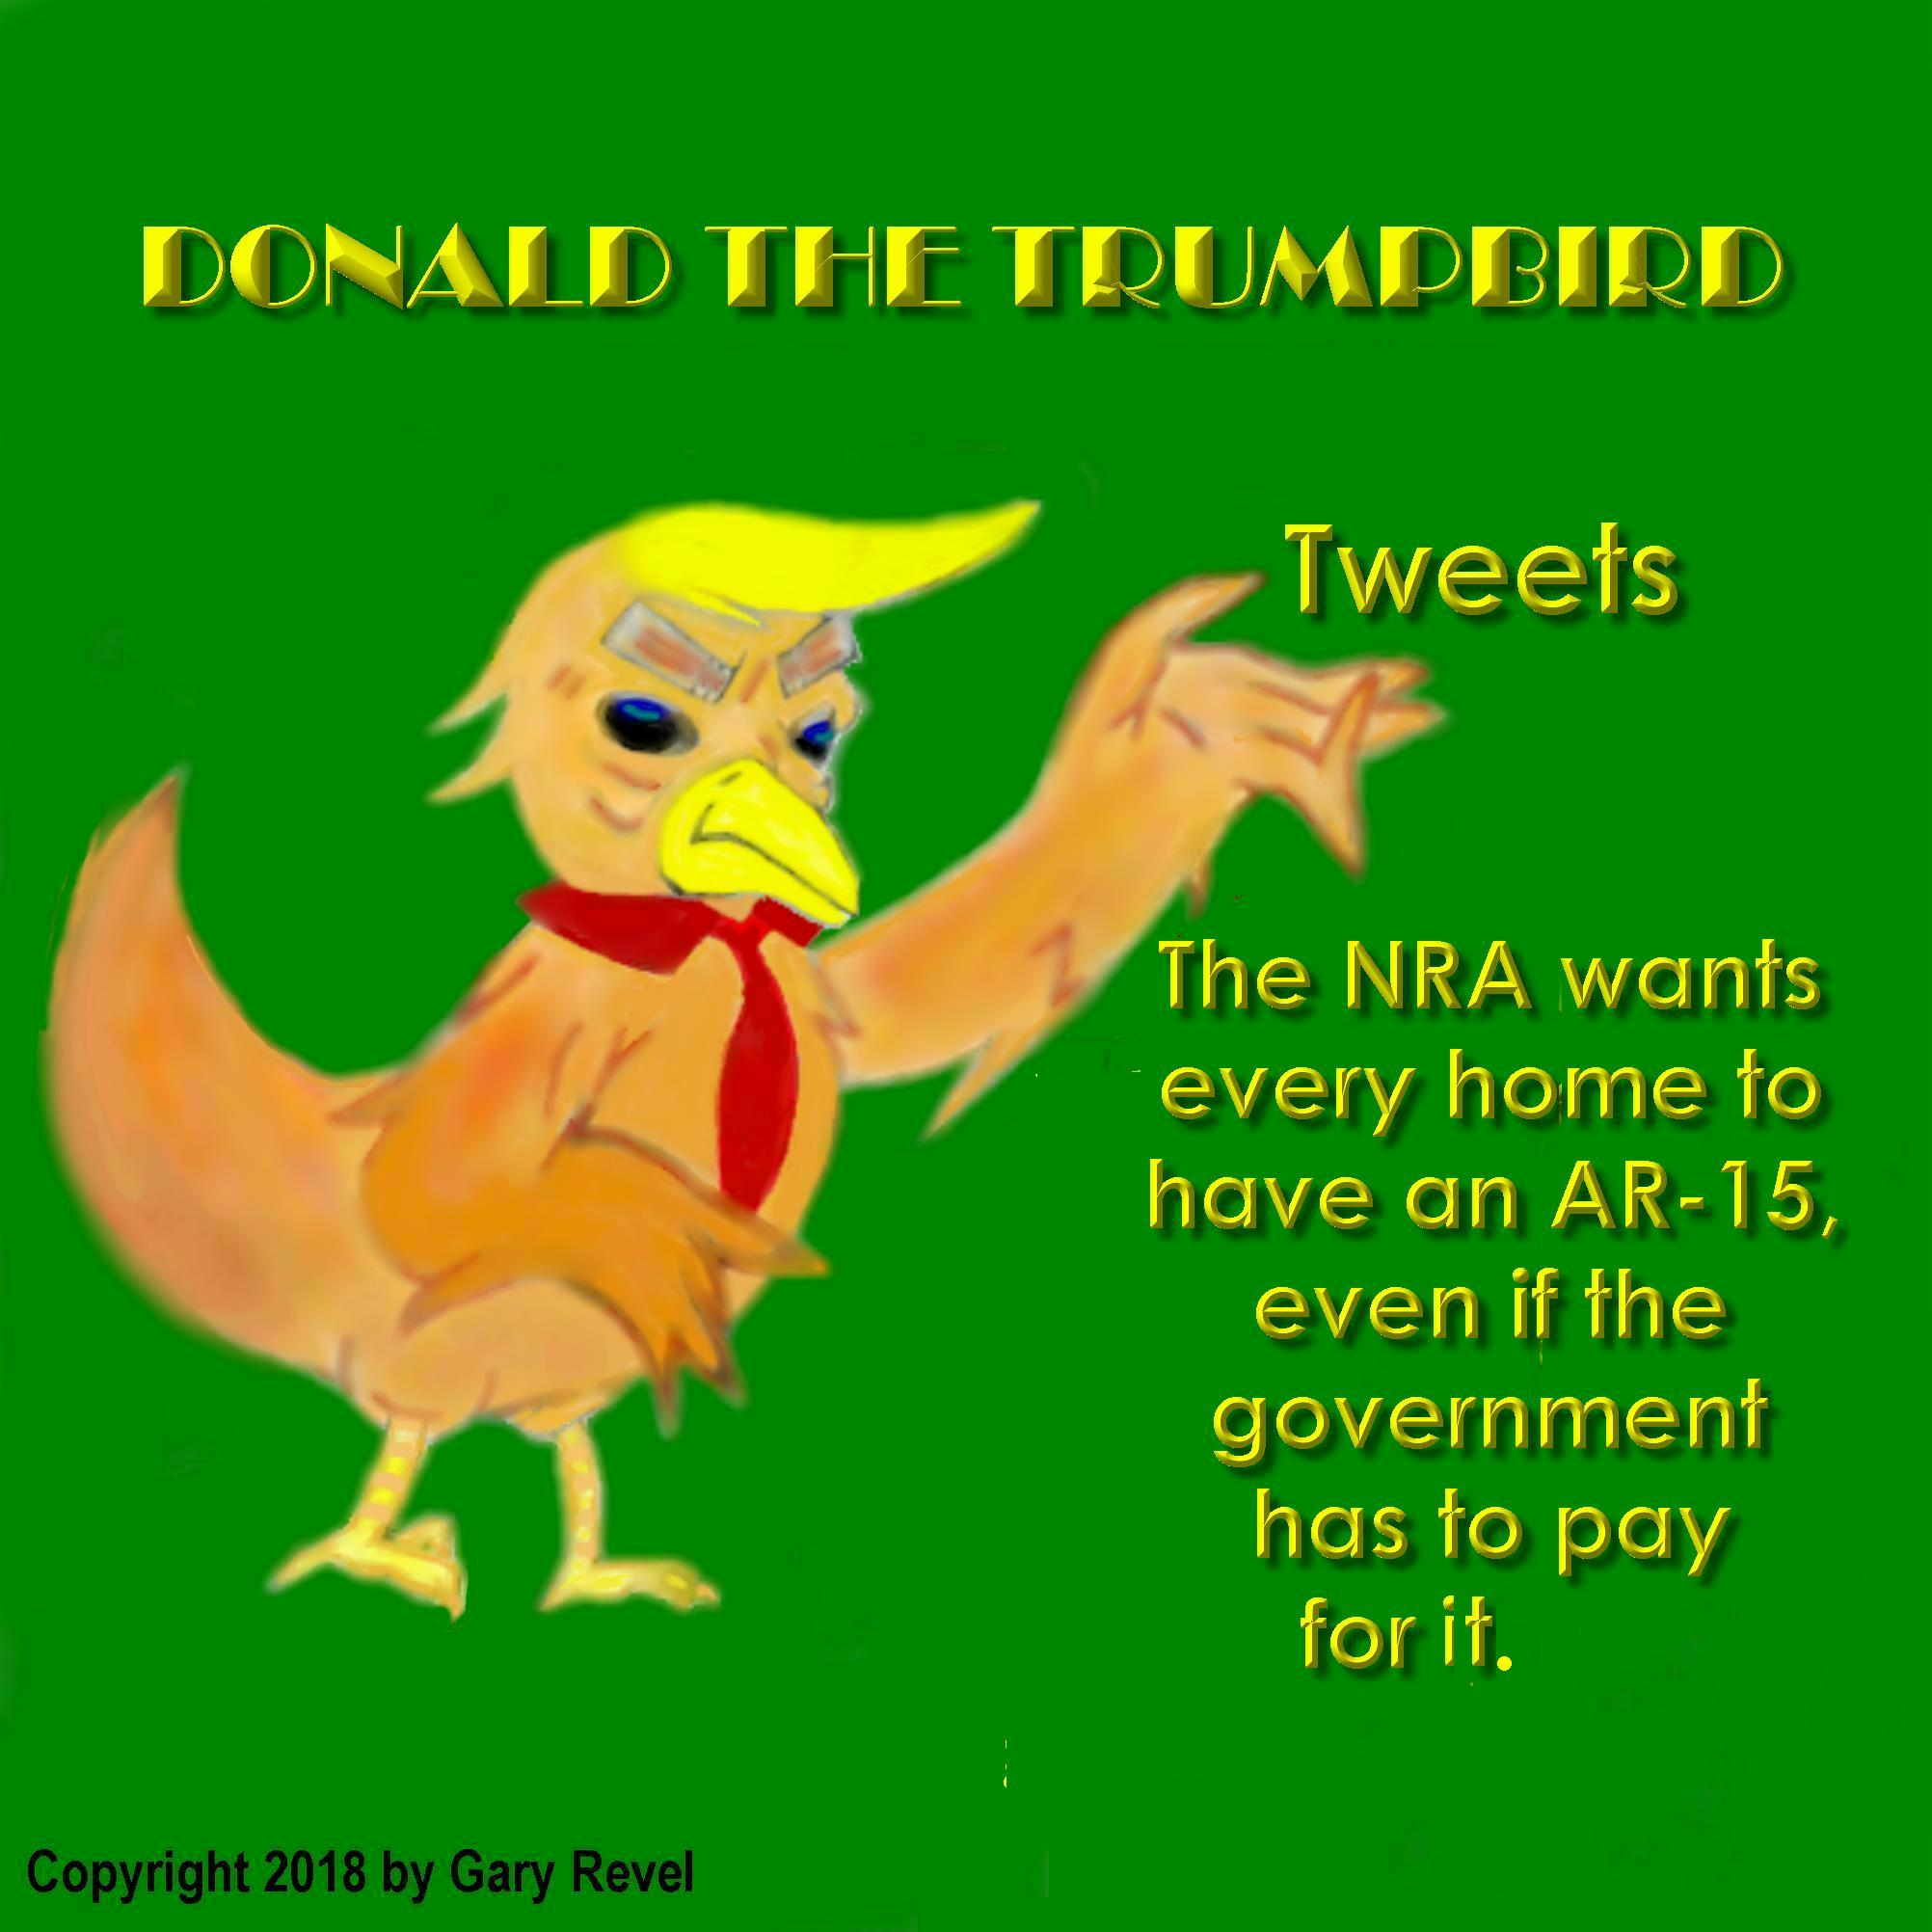 Donald the Trumpbird says it's the assault rifles